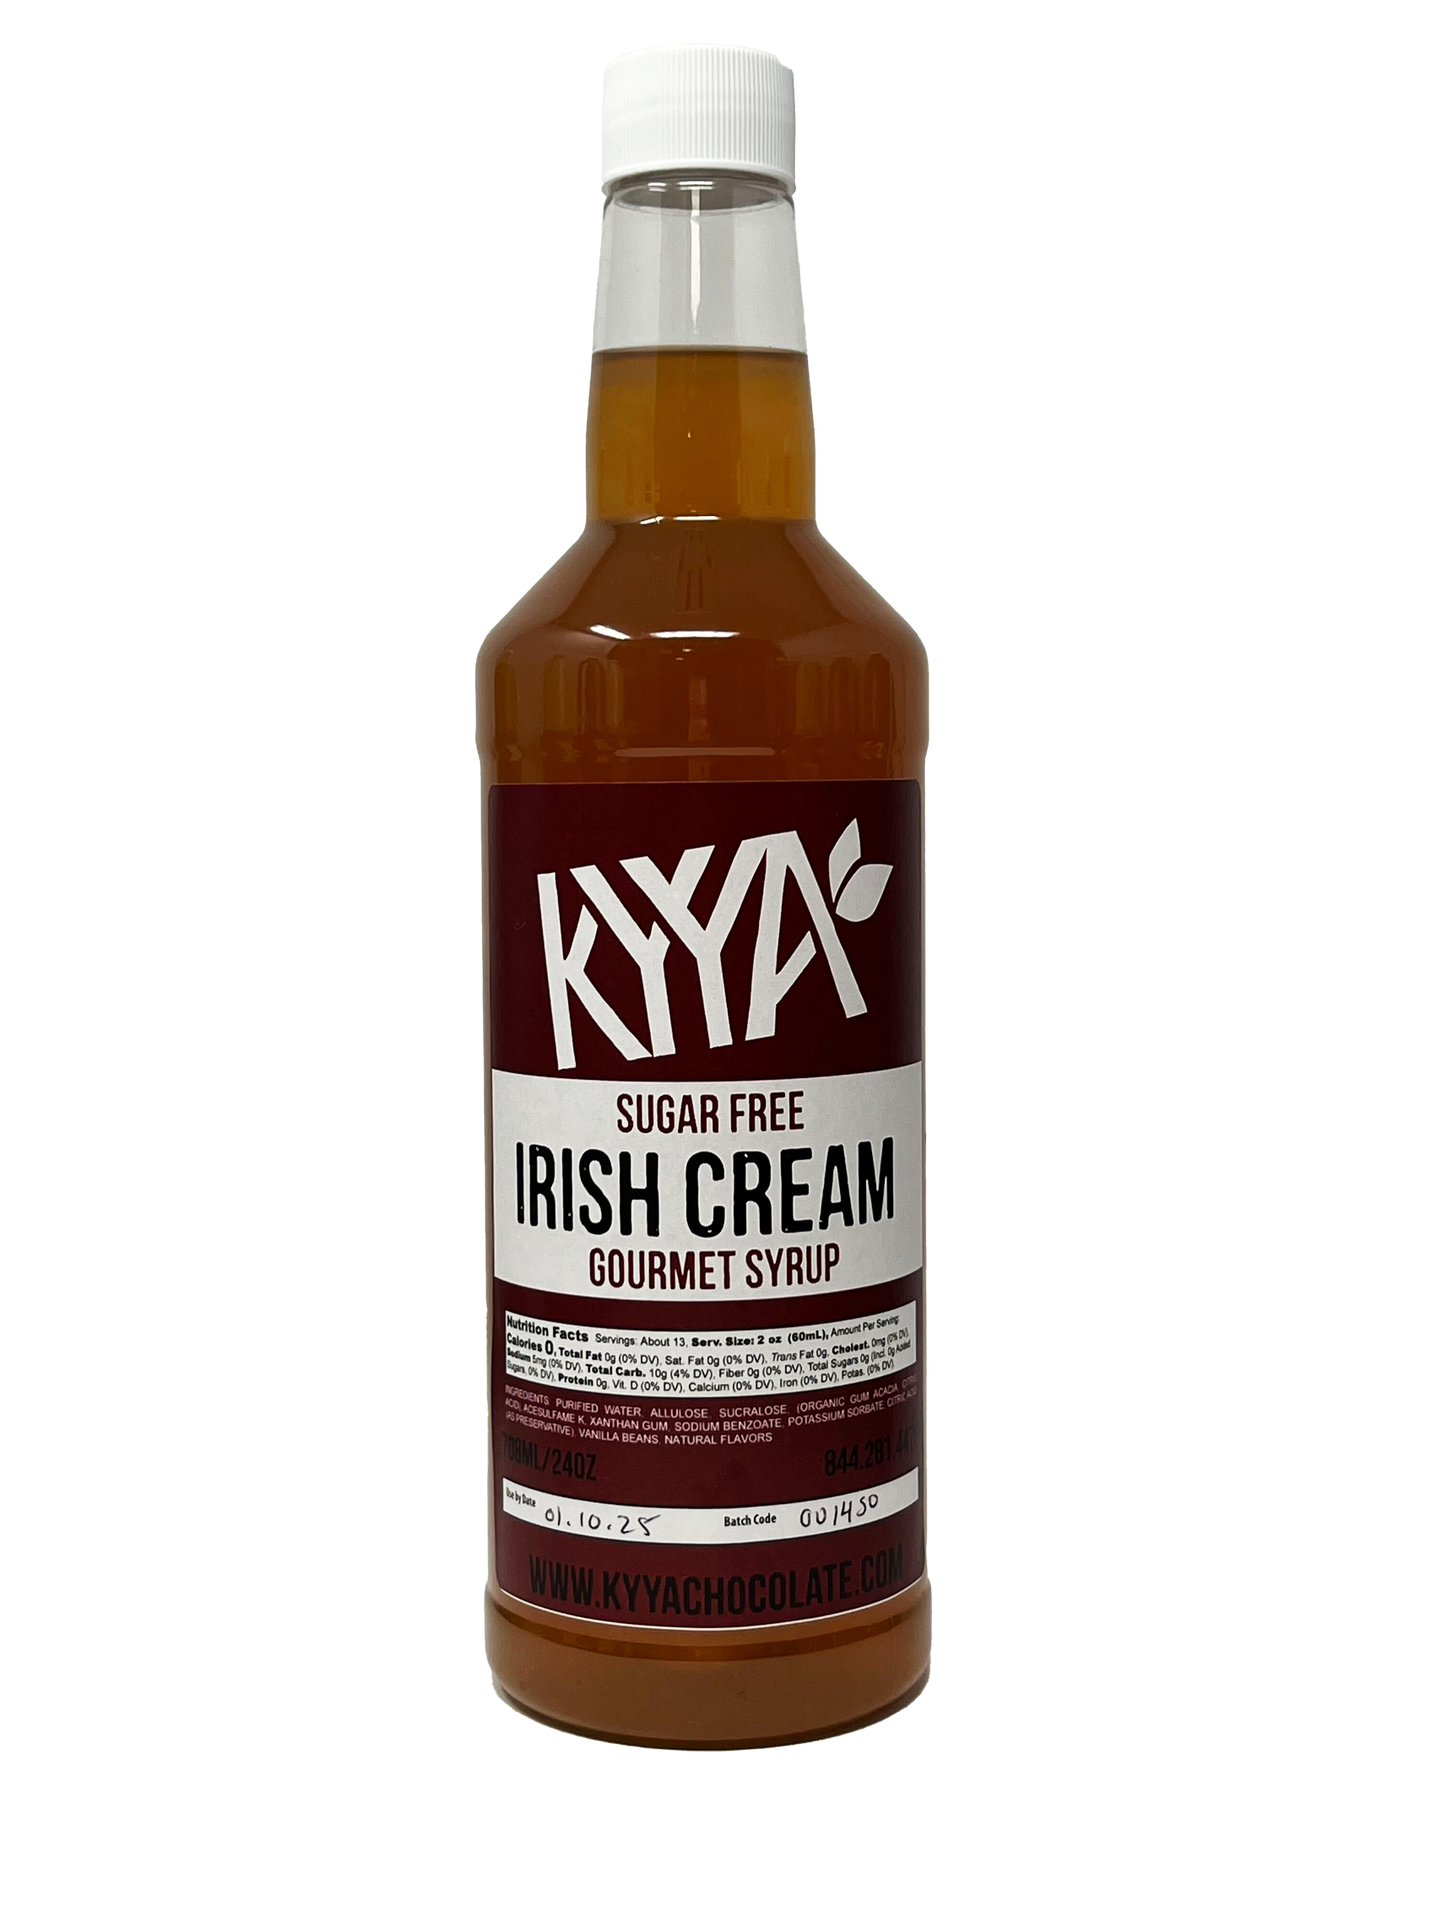 Sugar Free Irish Cream Gourmet Syrup